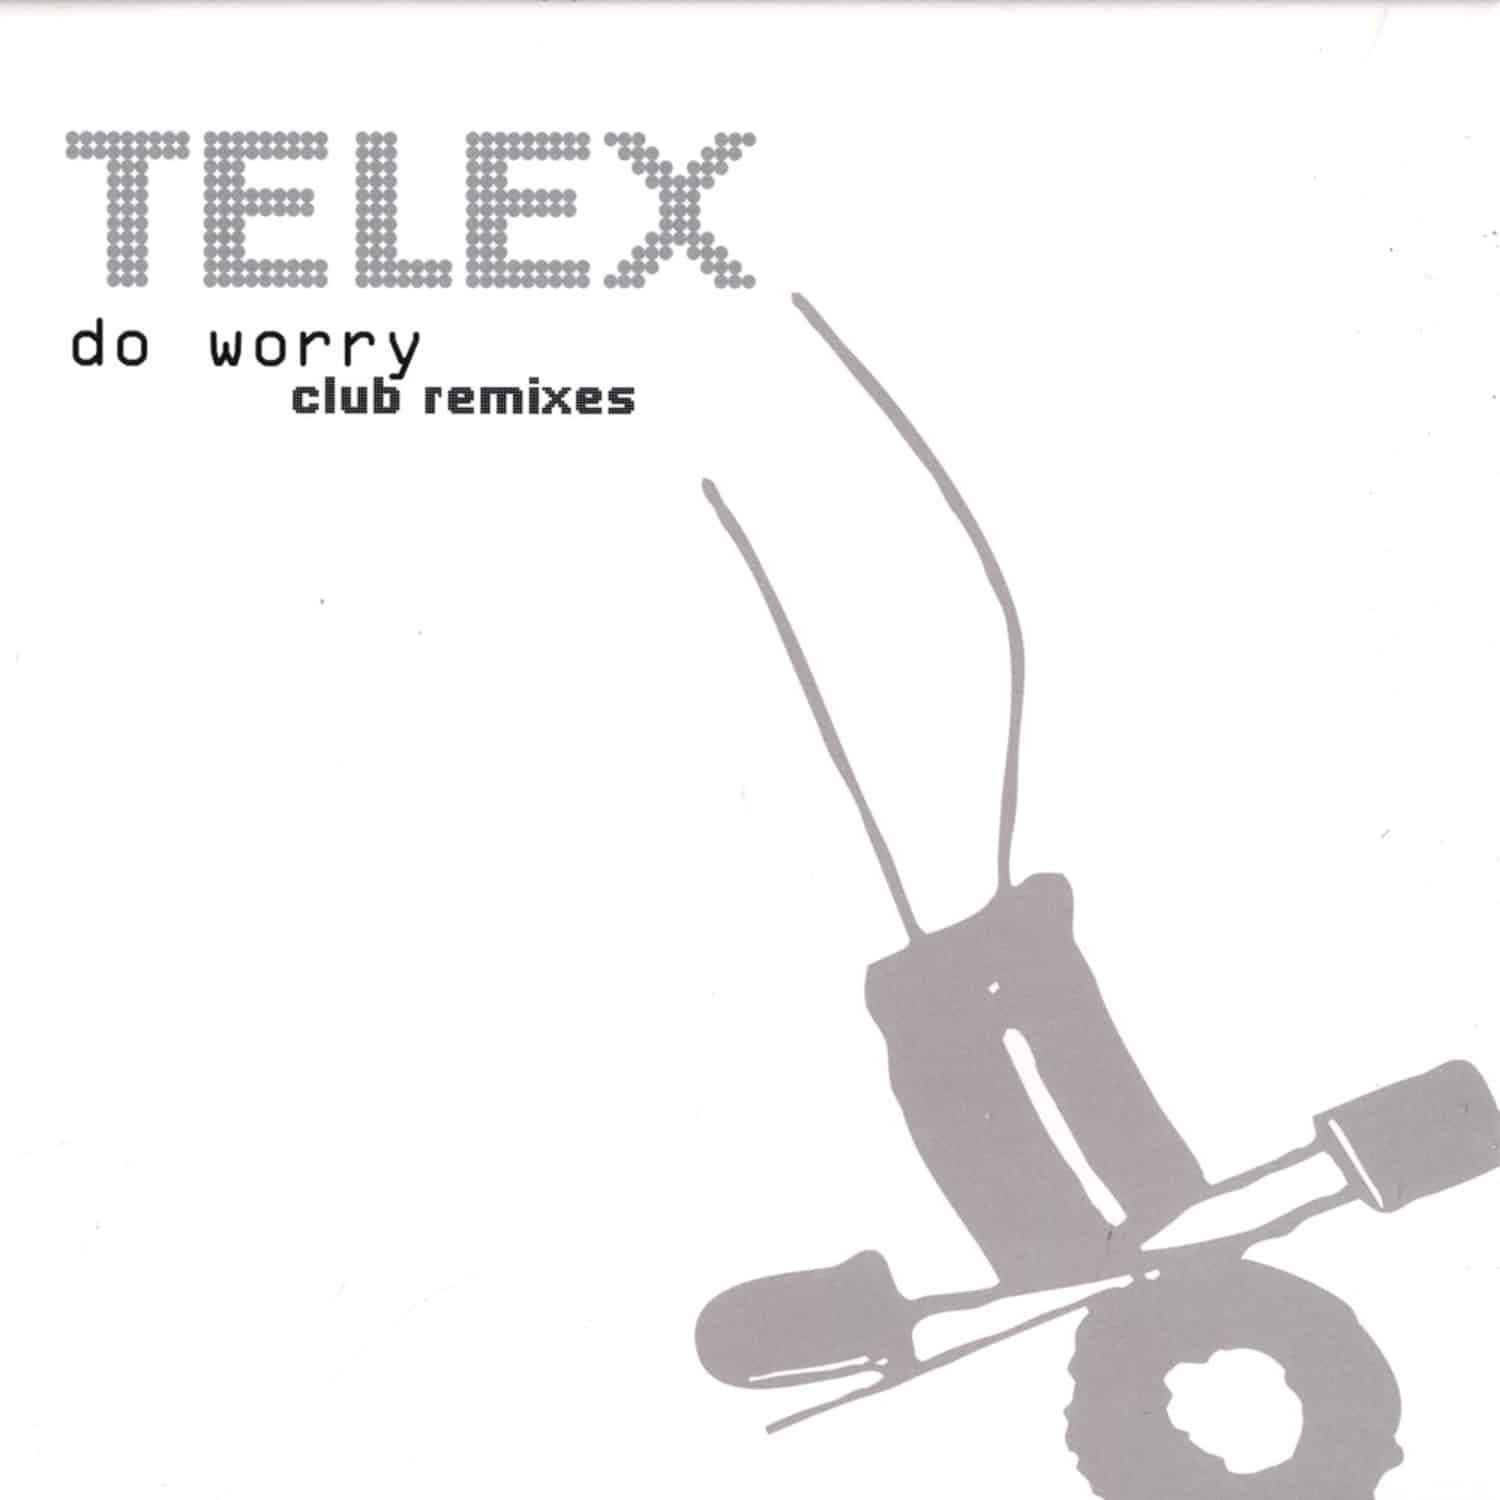 Telex - DO WORRY CLUB REMIXES